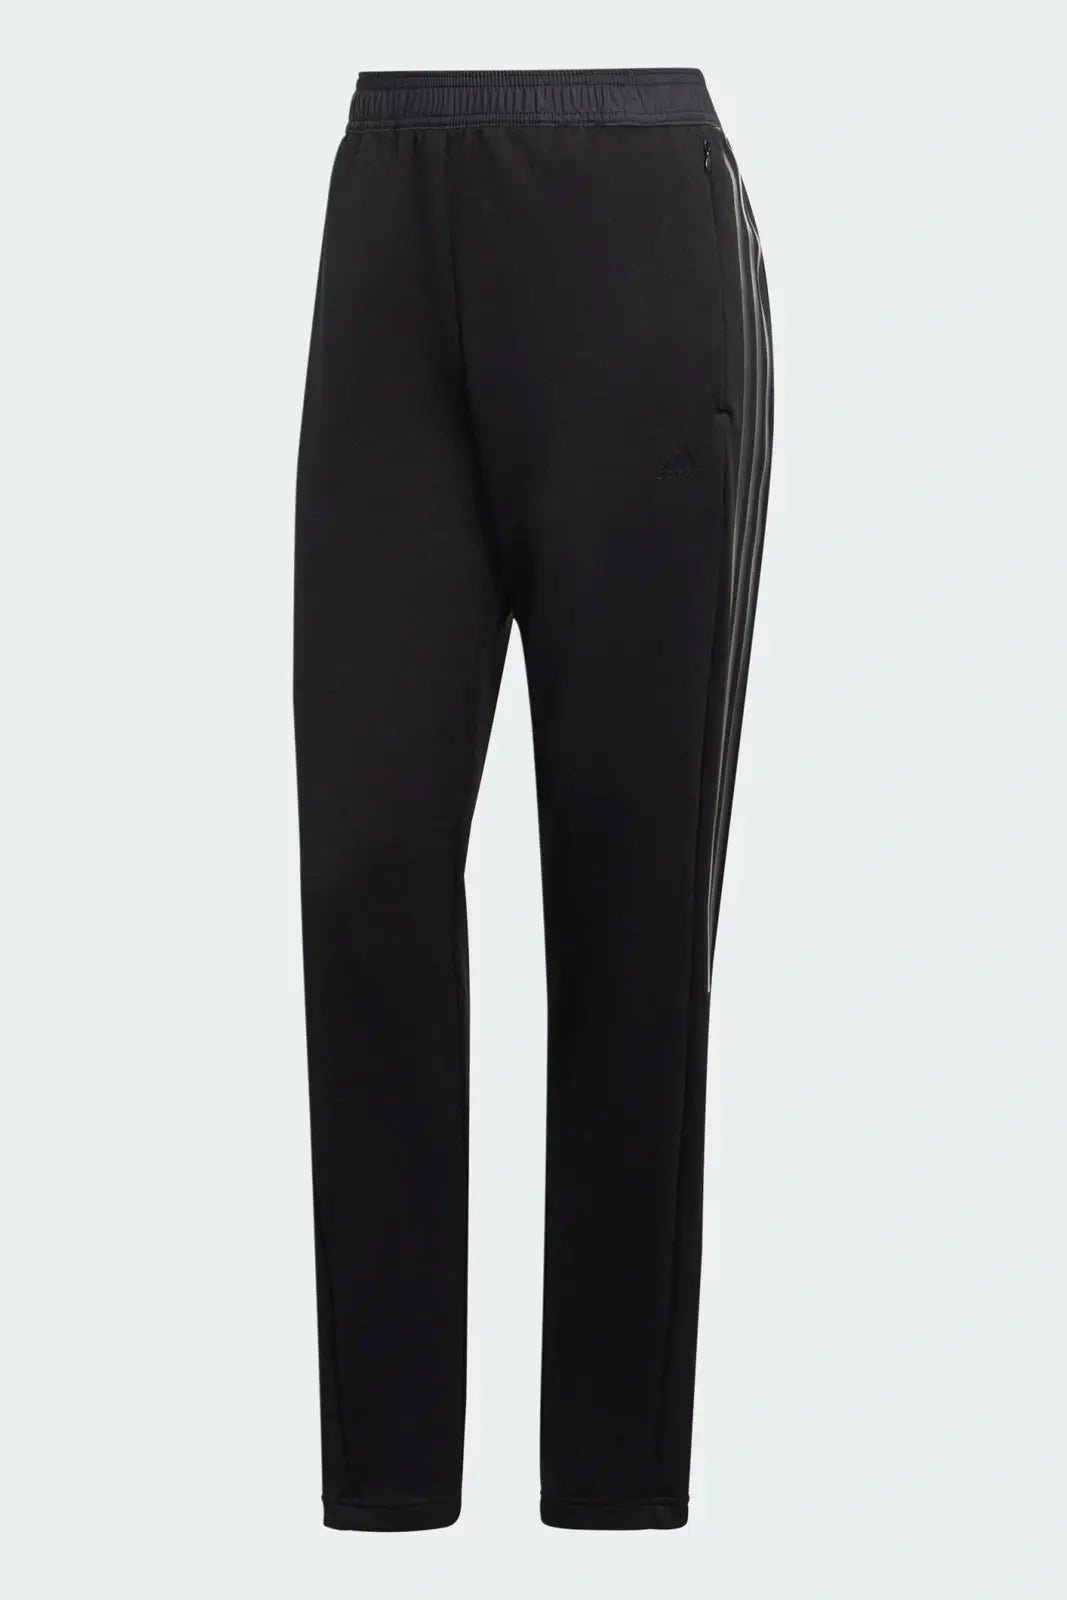 ADIDAS - מכנסיים ארוכים TIRO לנשים בצבע שחור - MASHBIR//365